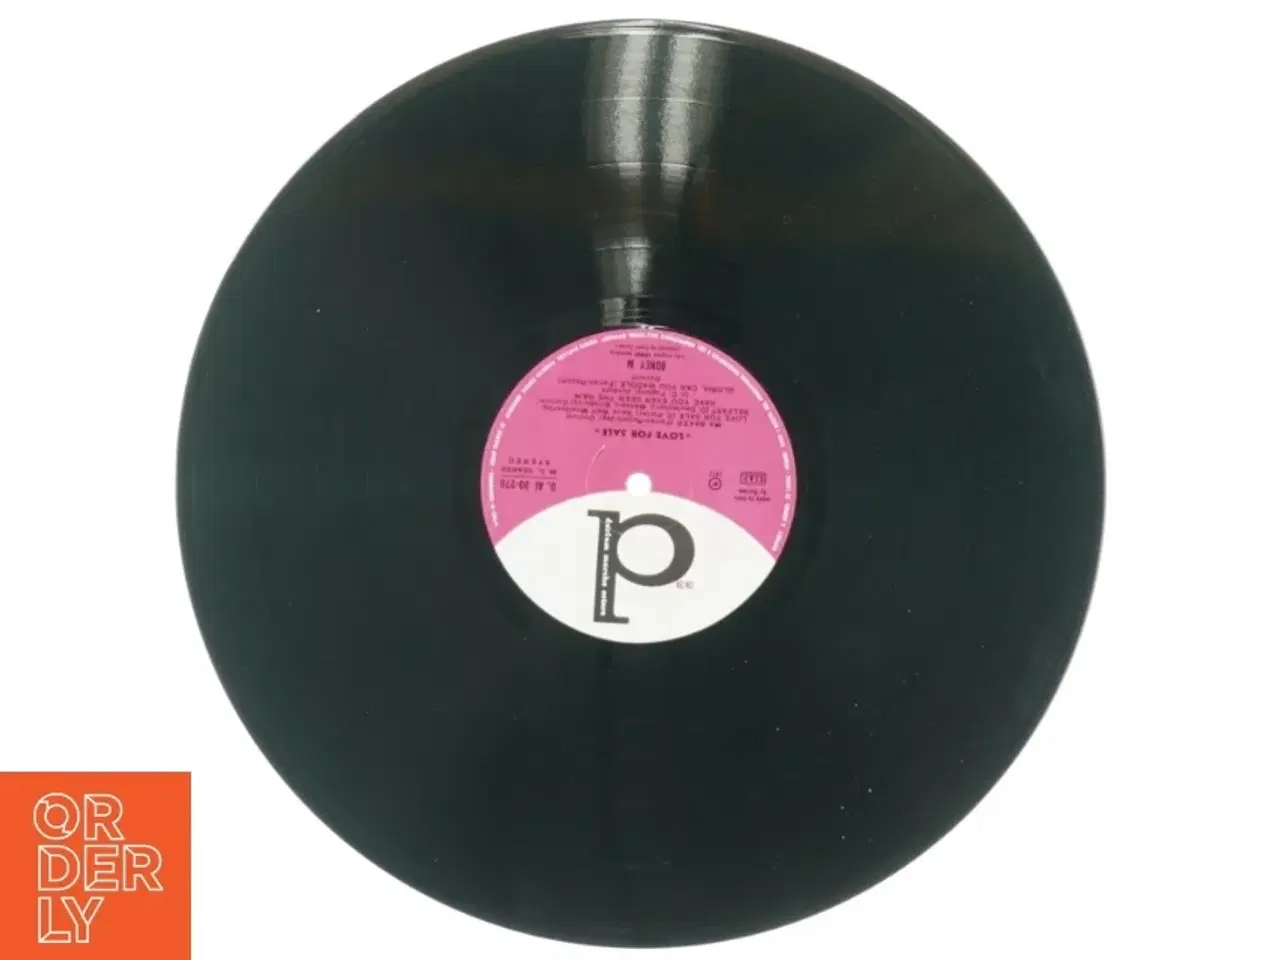 Billede 3 - Boney M, love for sale fra Siae (str. 30 cm)